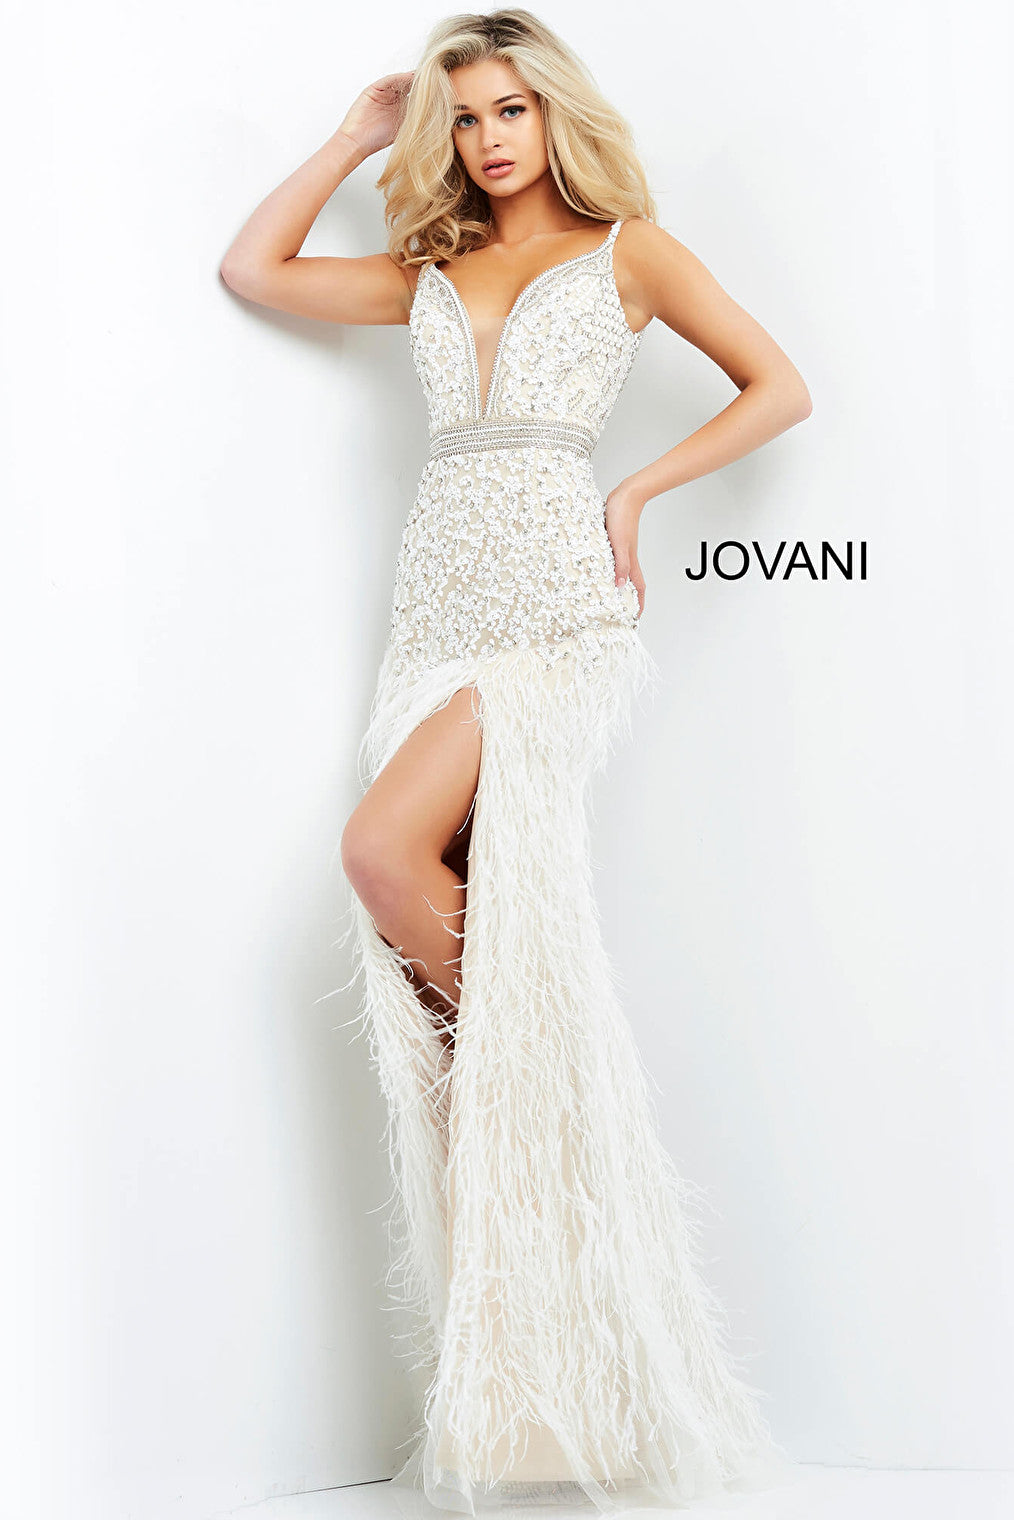 Feather skirt white prom dress Jovani 04626